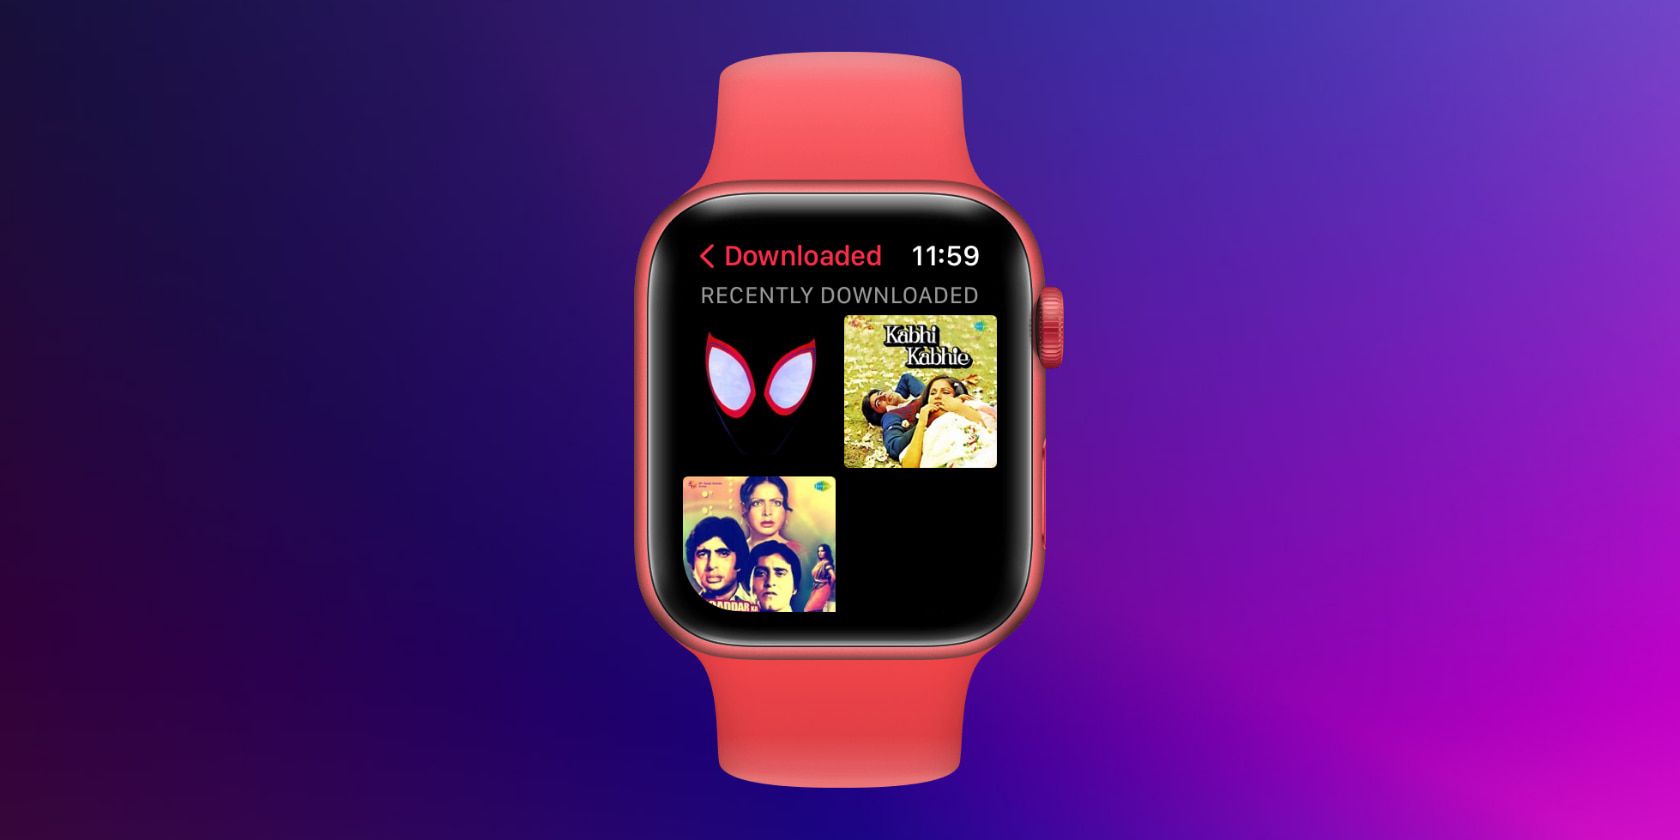 Add music to Apple Watch